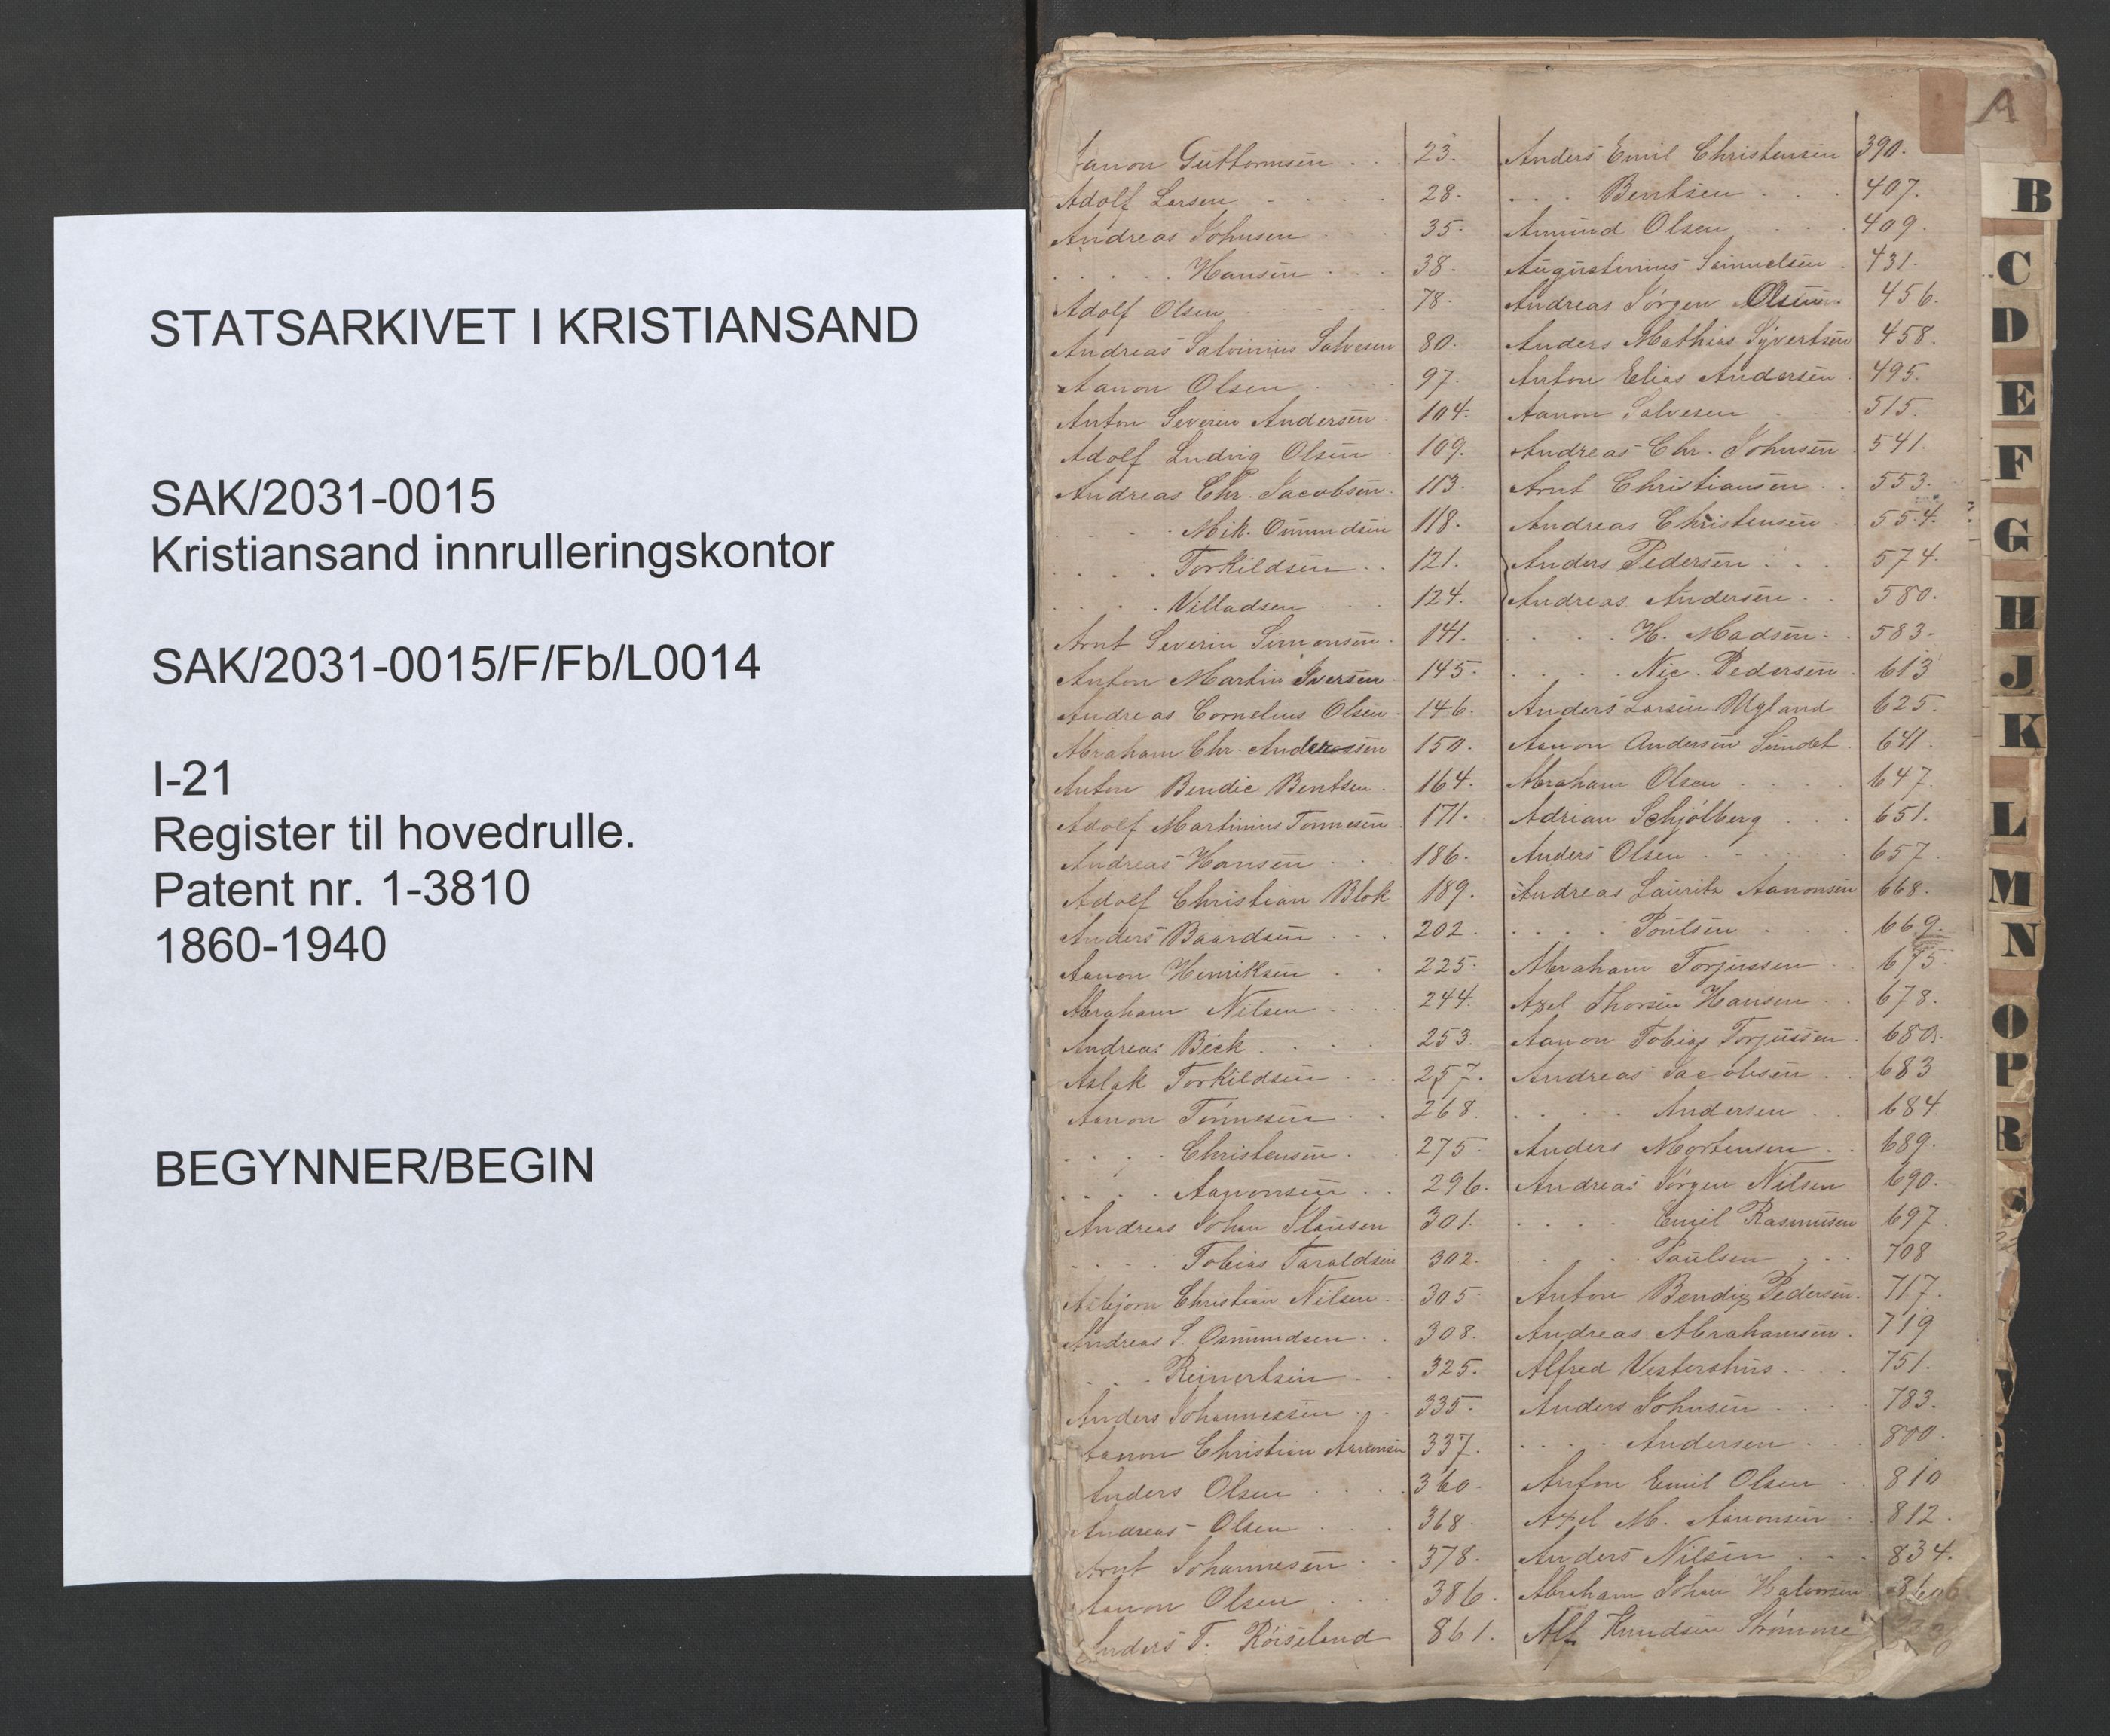 Kristiansand mønstringskrets, SAK/2031-0015/F/Fb/L0014: Register til hovedrulle nr 1-3810, I-21, 1860-1940, p. 2